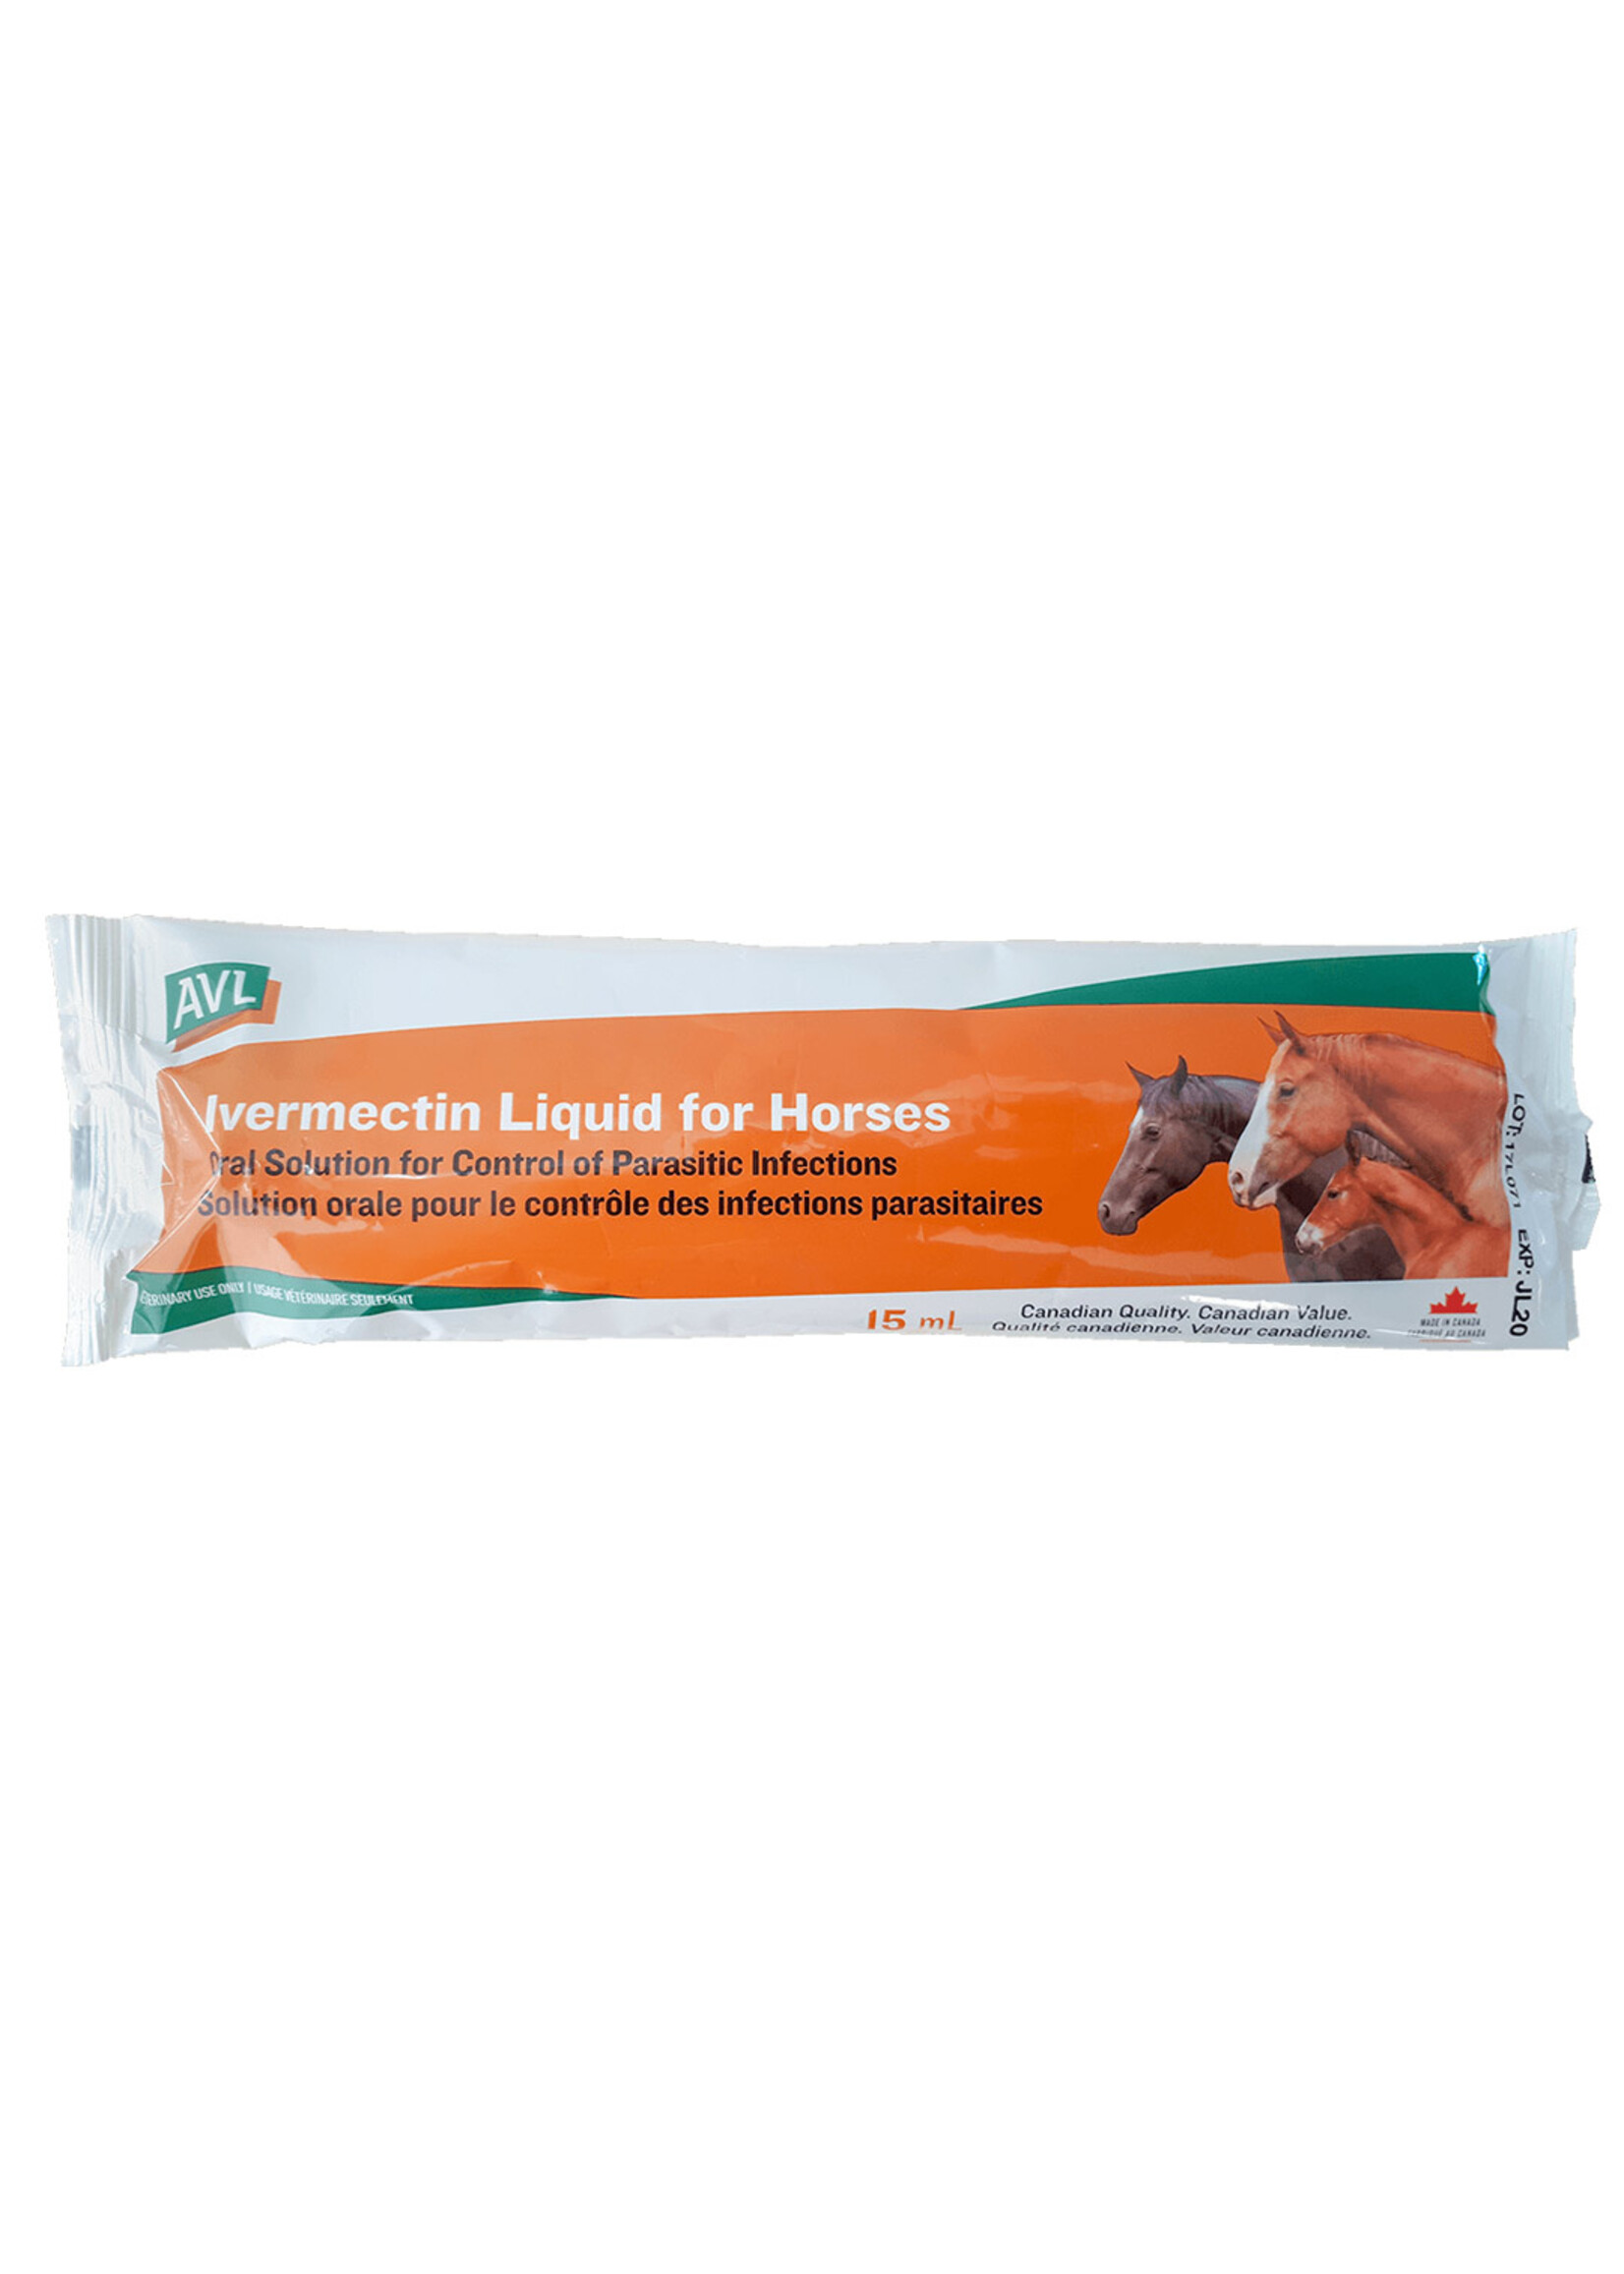 AVL Ivermectin - Liquid for Horses